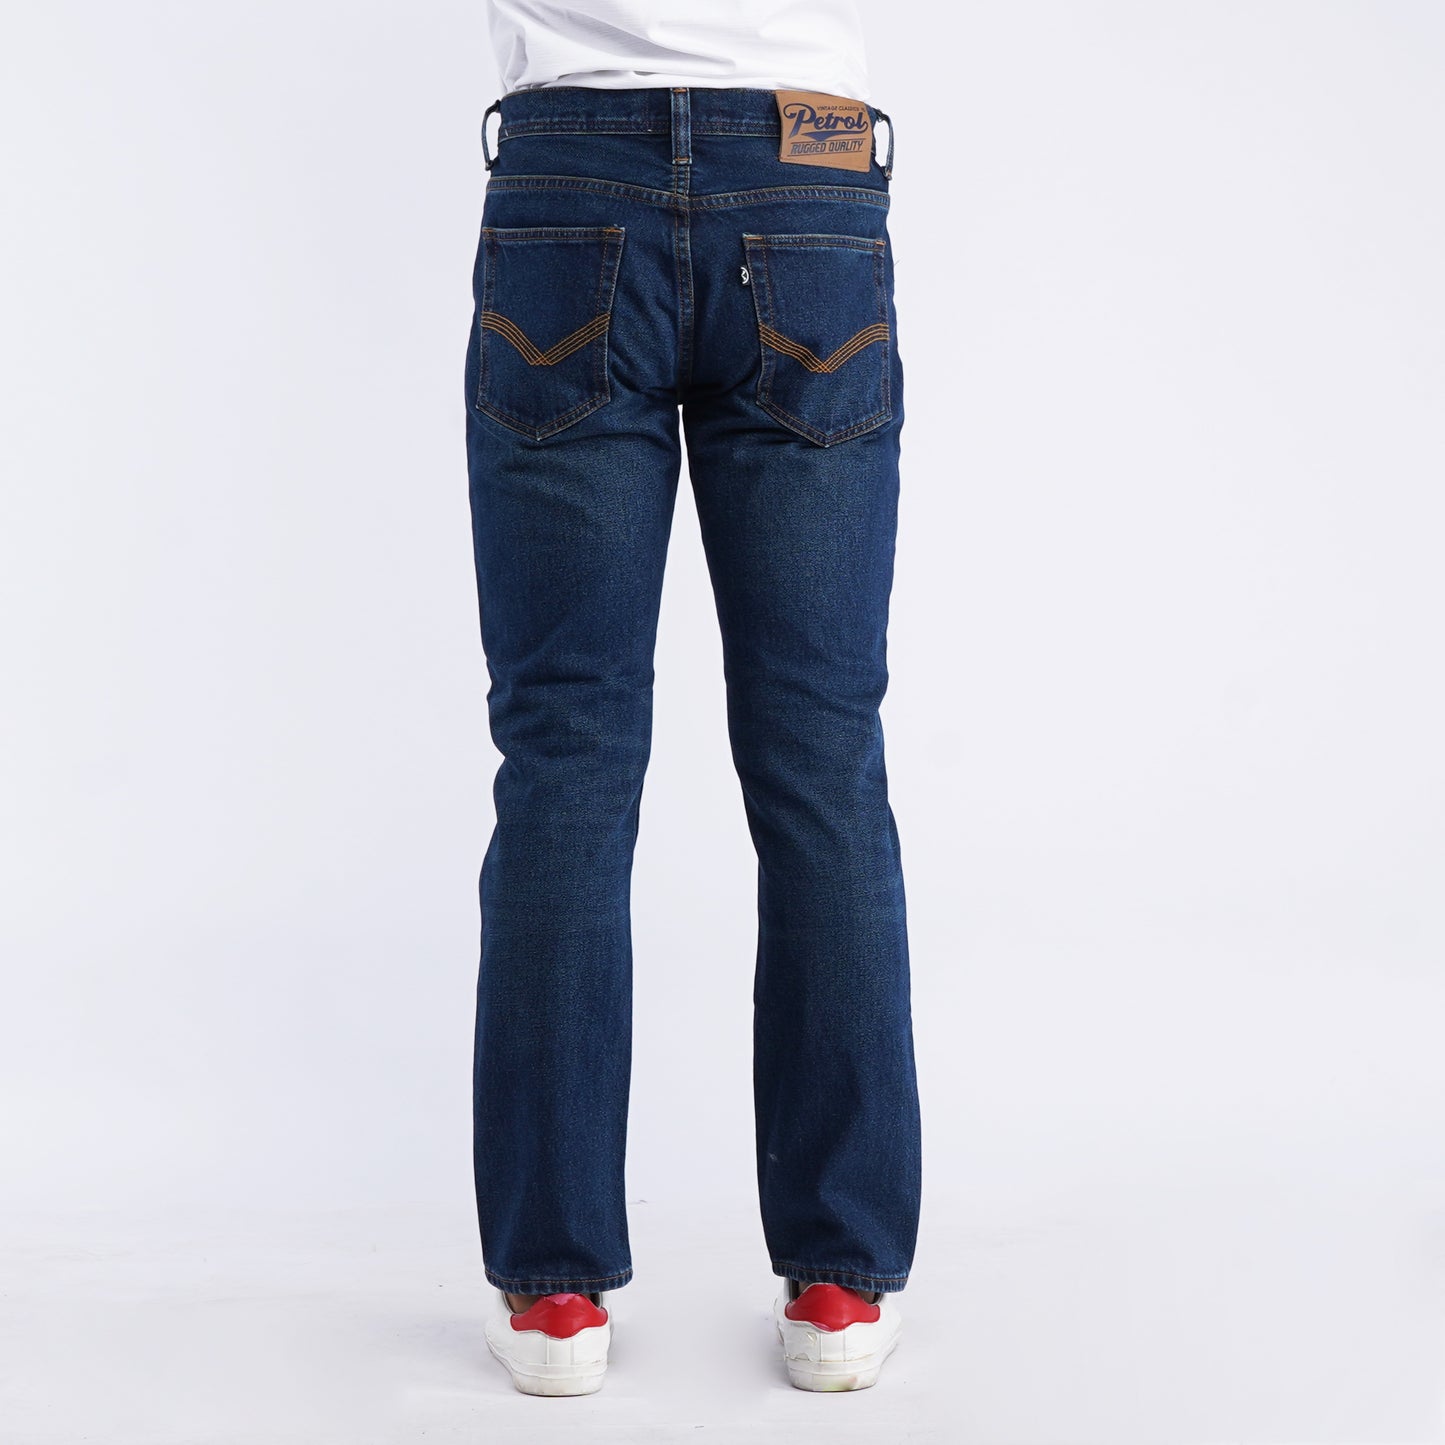 Petrol Basic Denim Pants for Men Super Skinny Fitting Mid Rise Trendy fashion Casual Bottoms Dark Shade Jeans for Men 132553-U (Dark Shade)